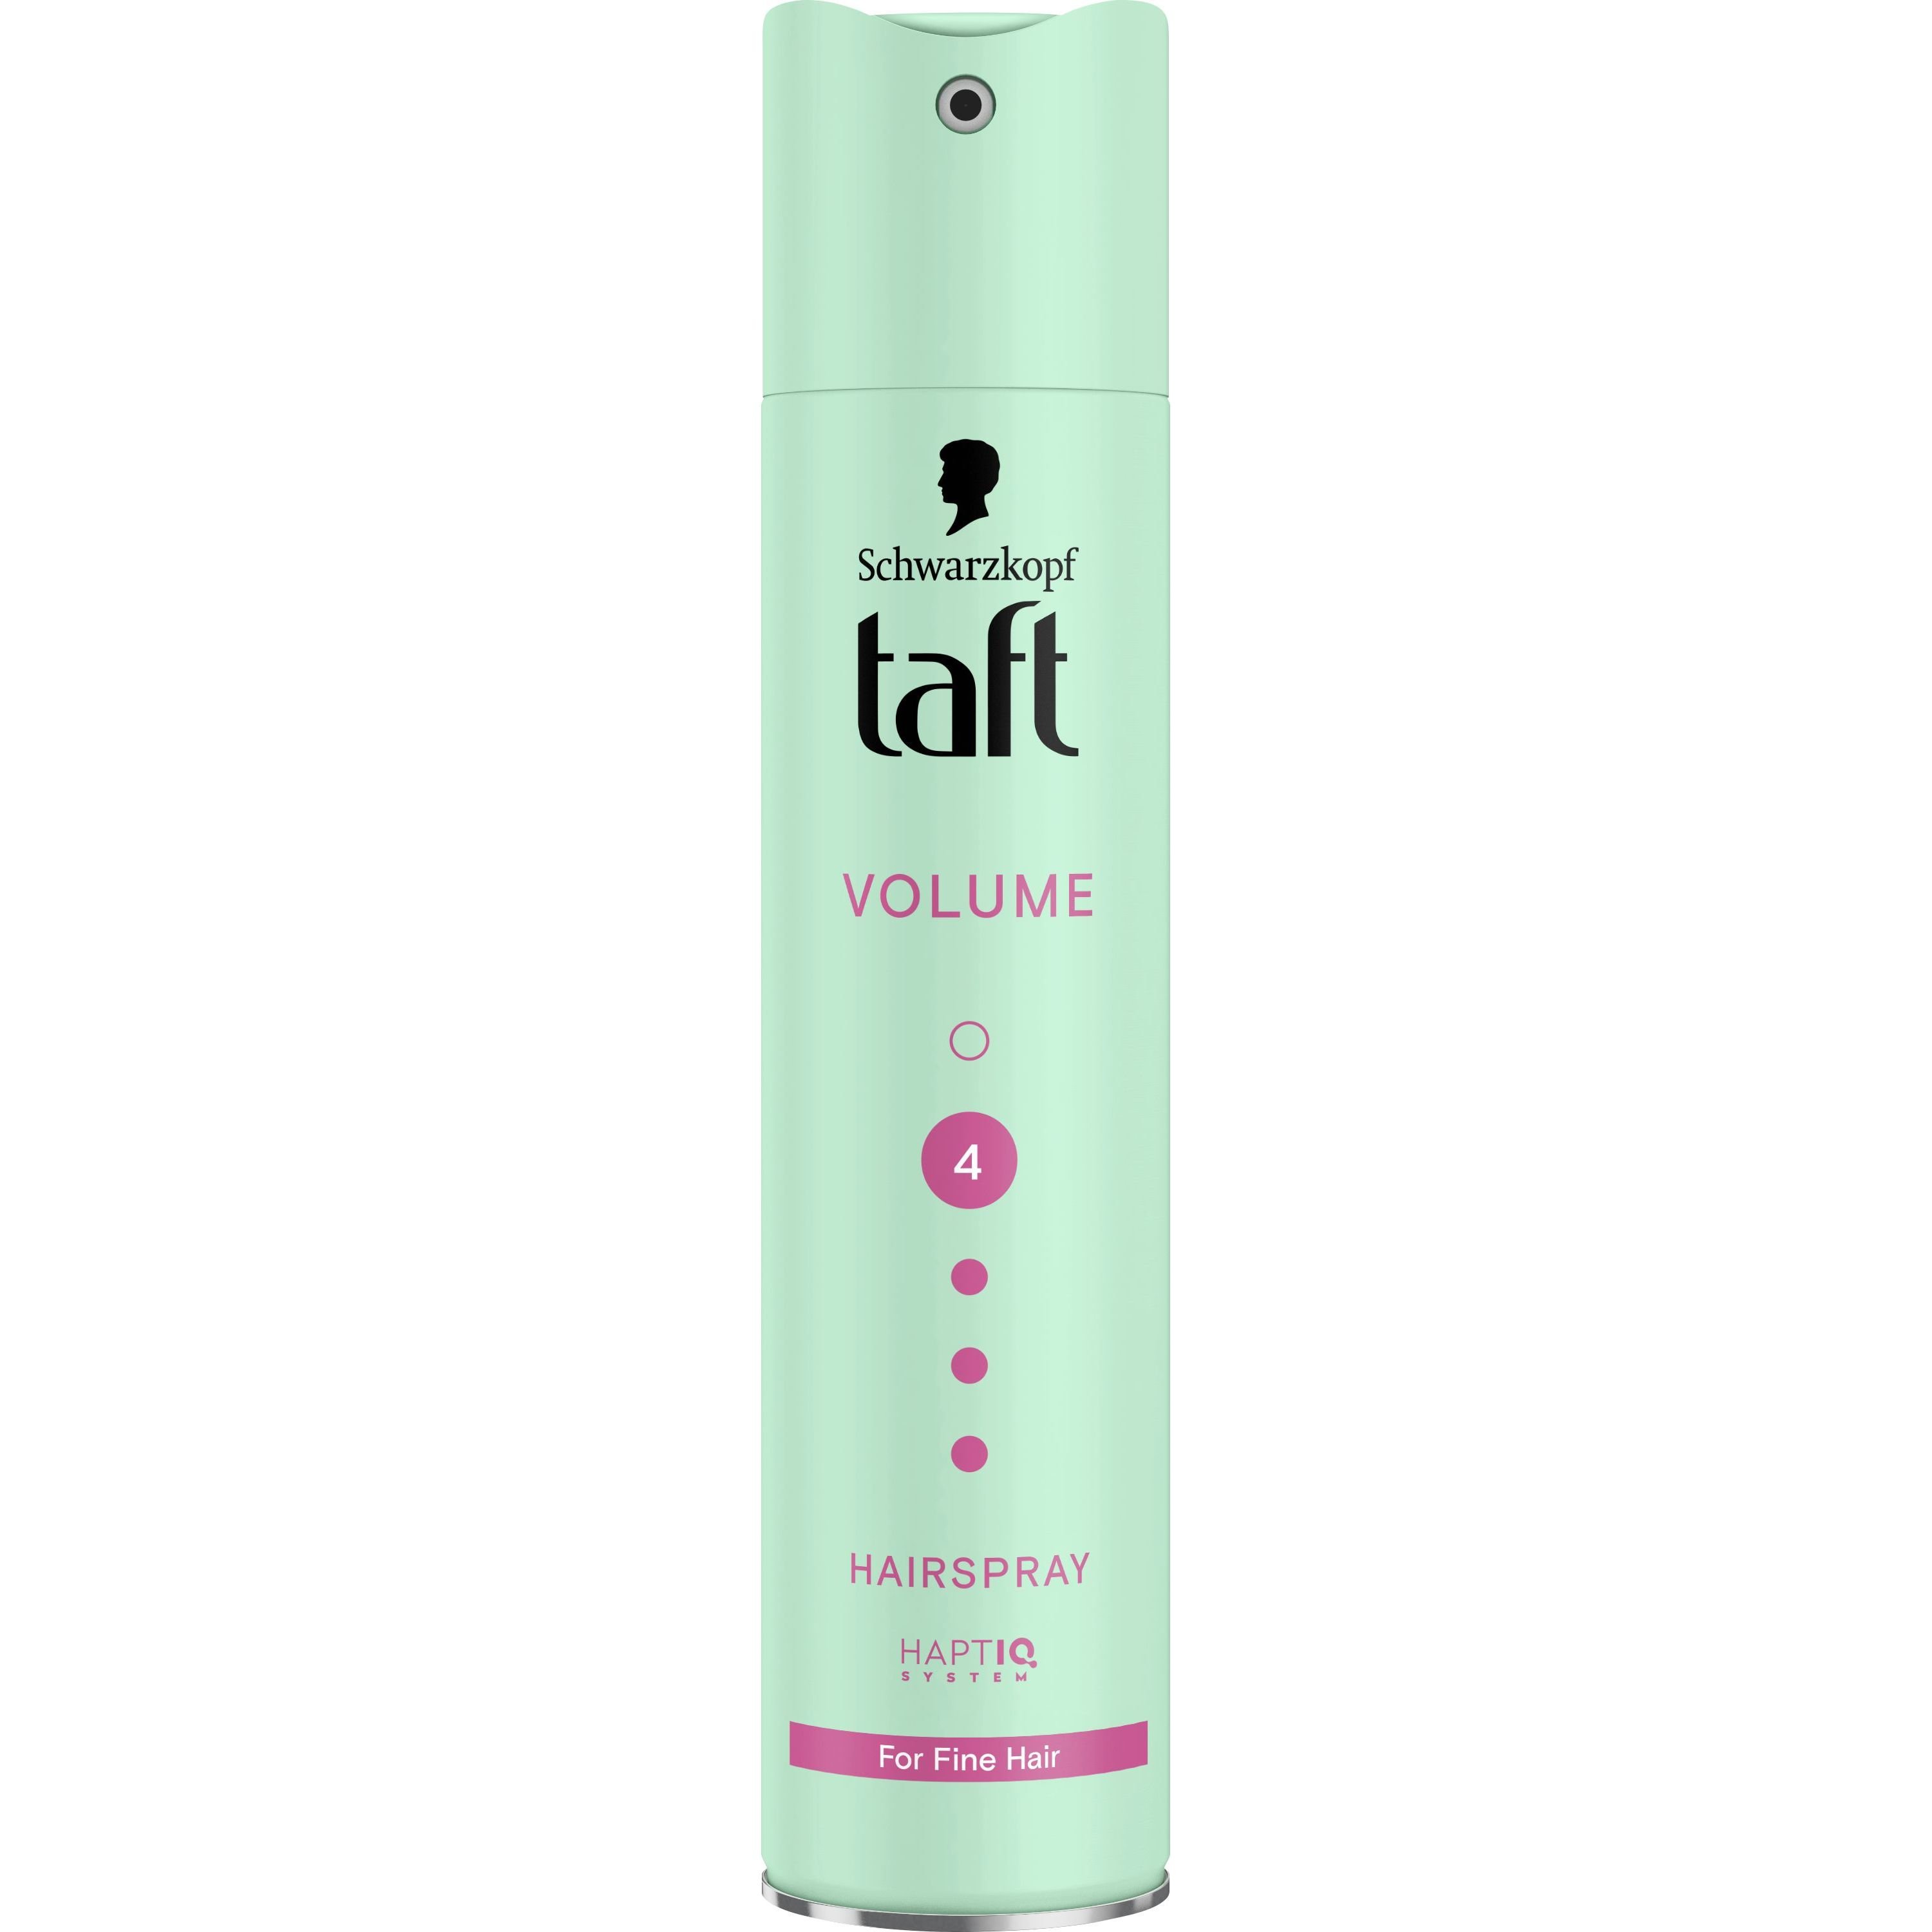 Лак Taft Volume 4 для тонкого волосся 250 мл - фото 1